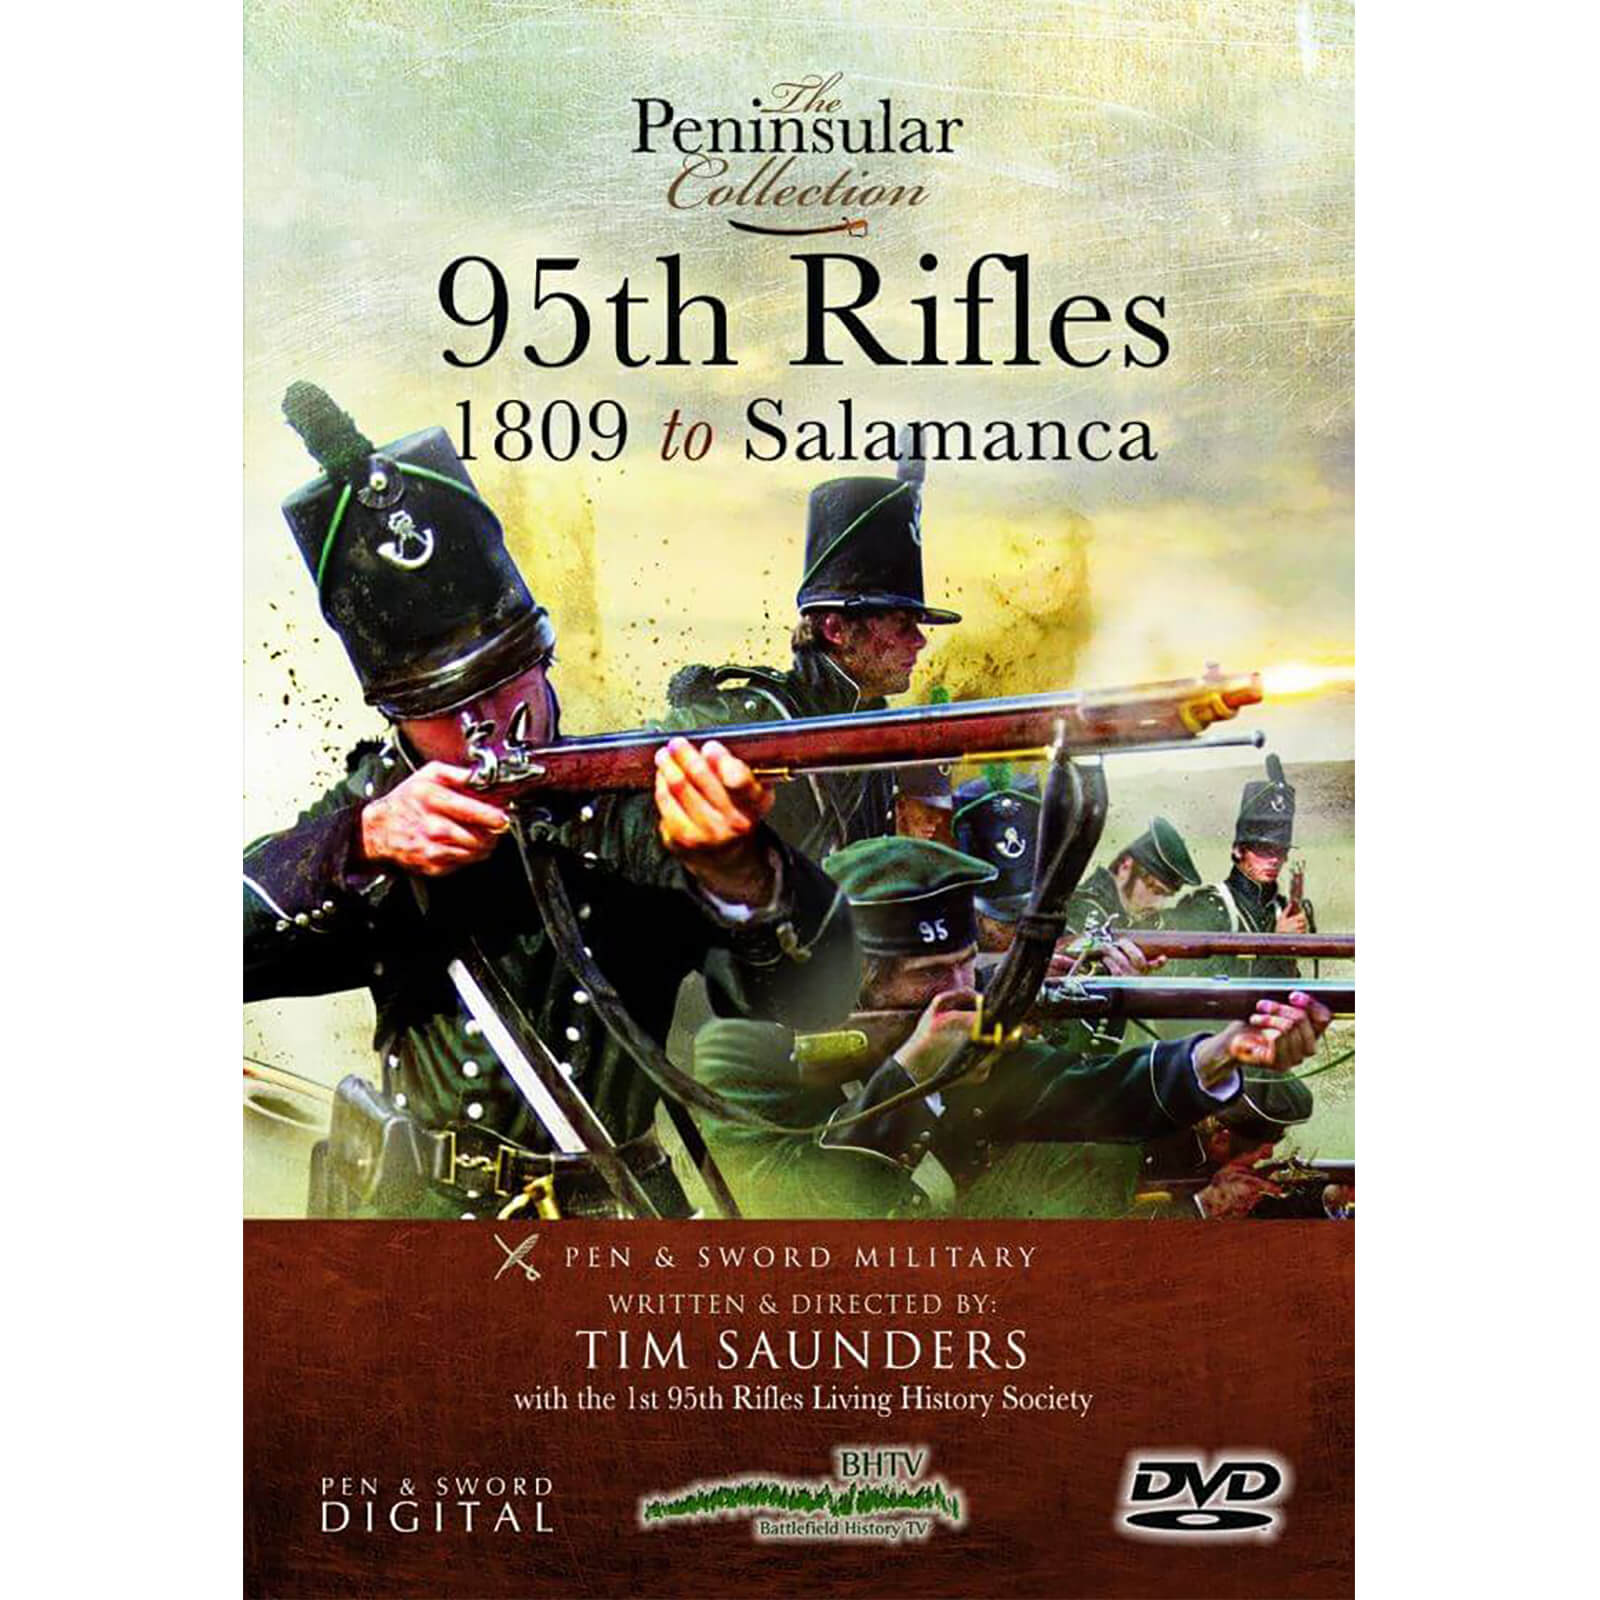 The Penninsular Collection: 95th Rifles - 1809 to Salamanca von Pen & Sword